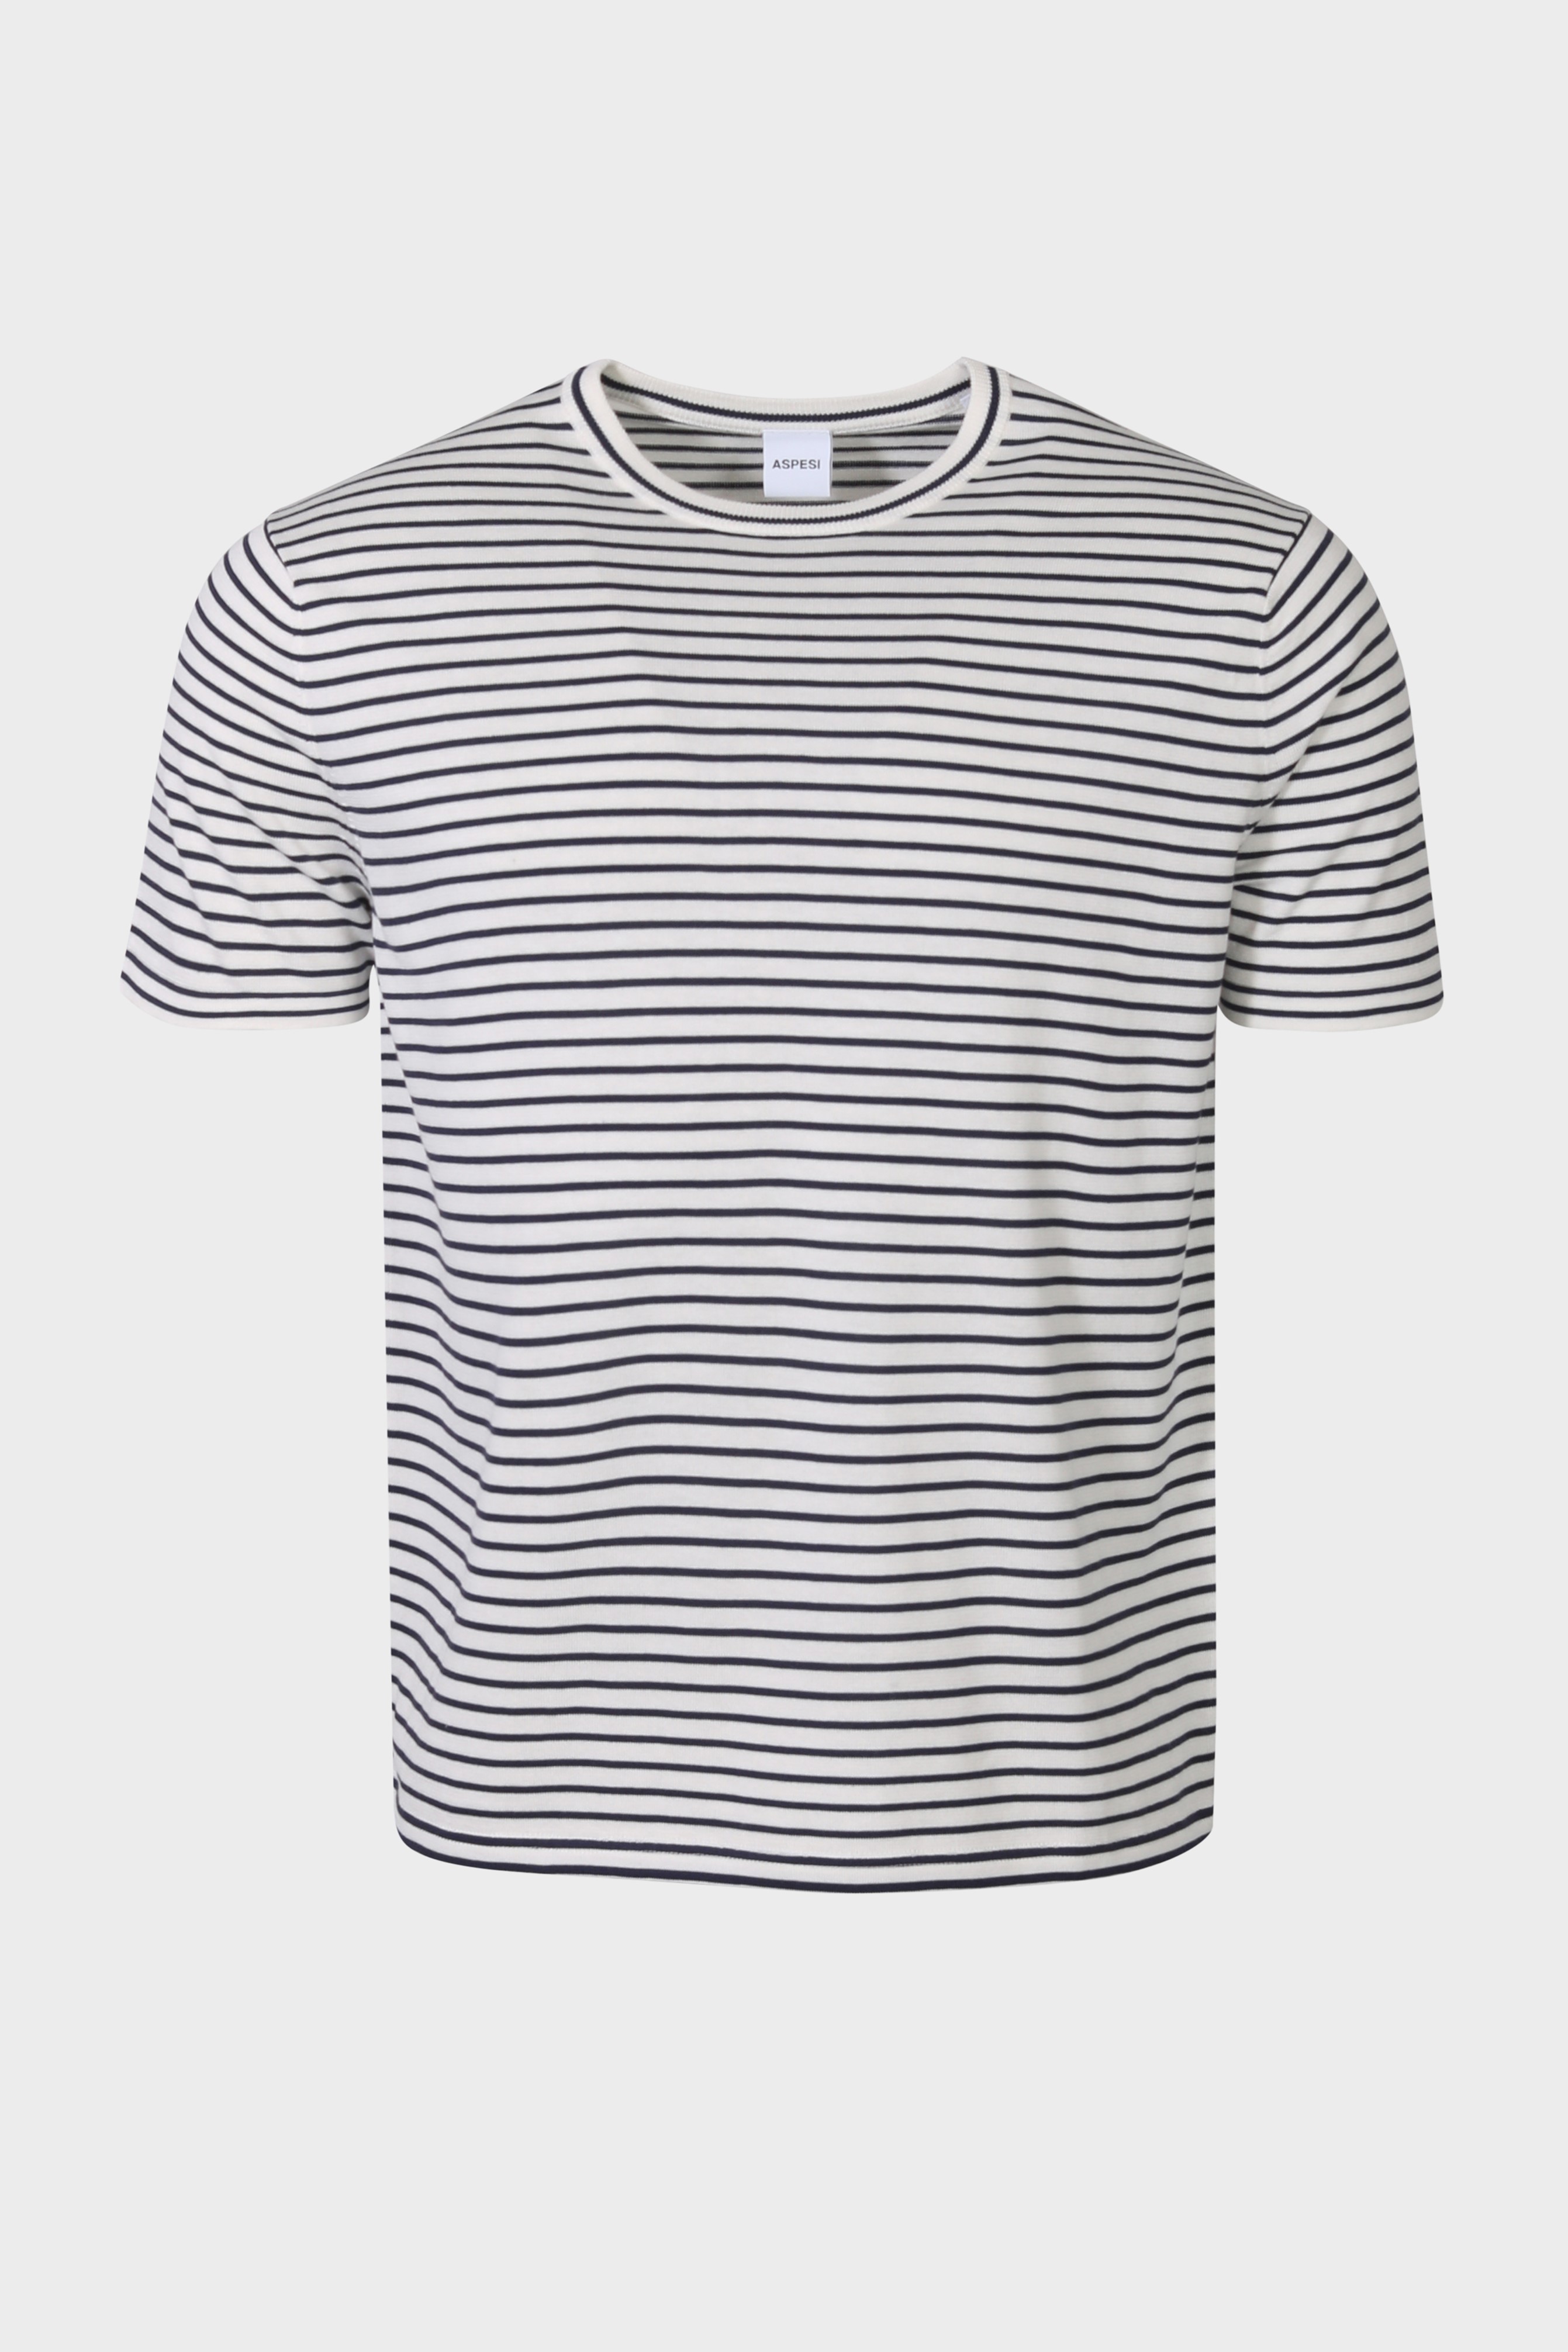 ASPESI Striped Knit T-Shirt in Navy/White 52